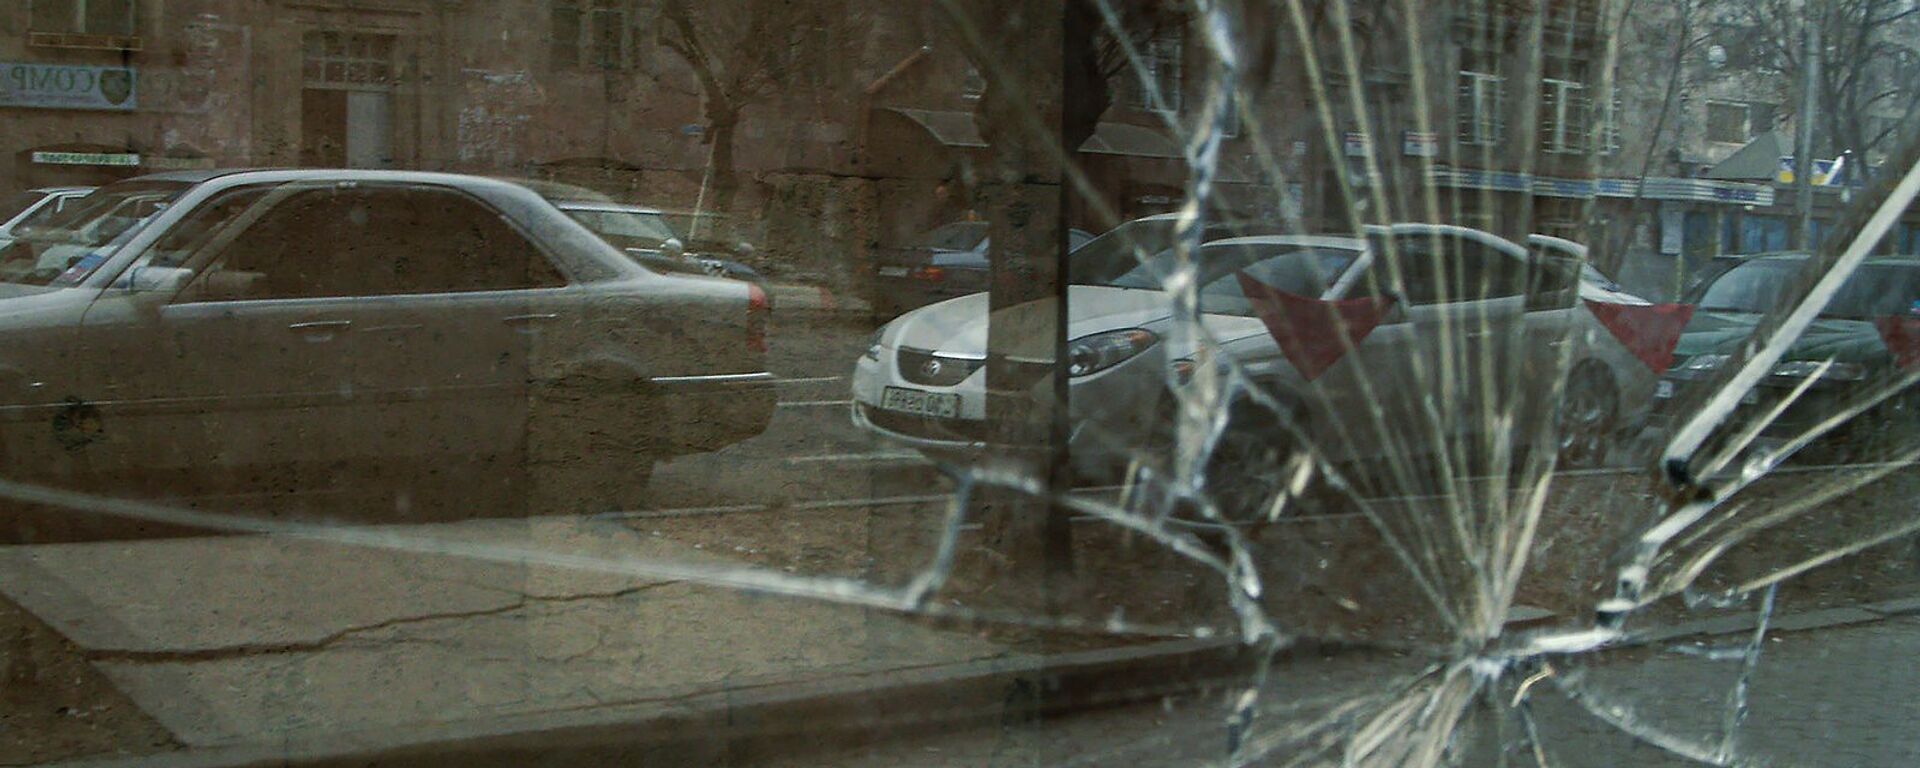 Разбитое стекло на улице - Sputnik Армения, 1920, 30.06.2021